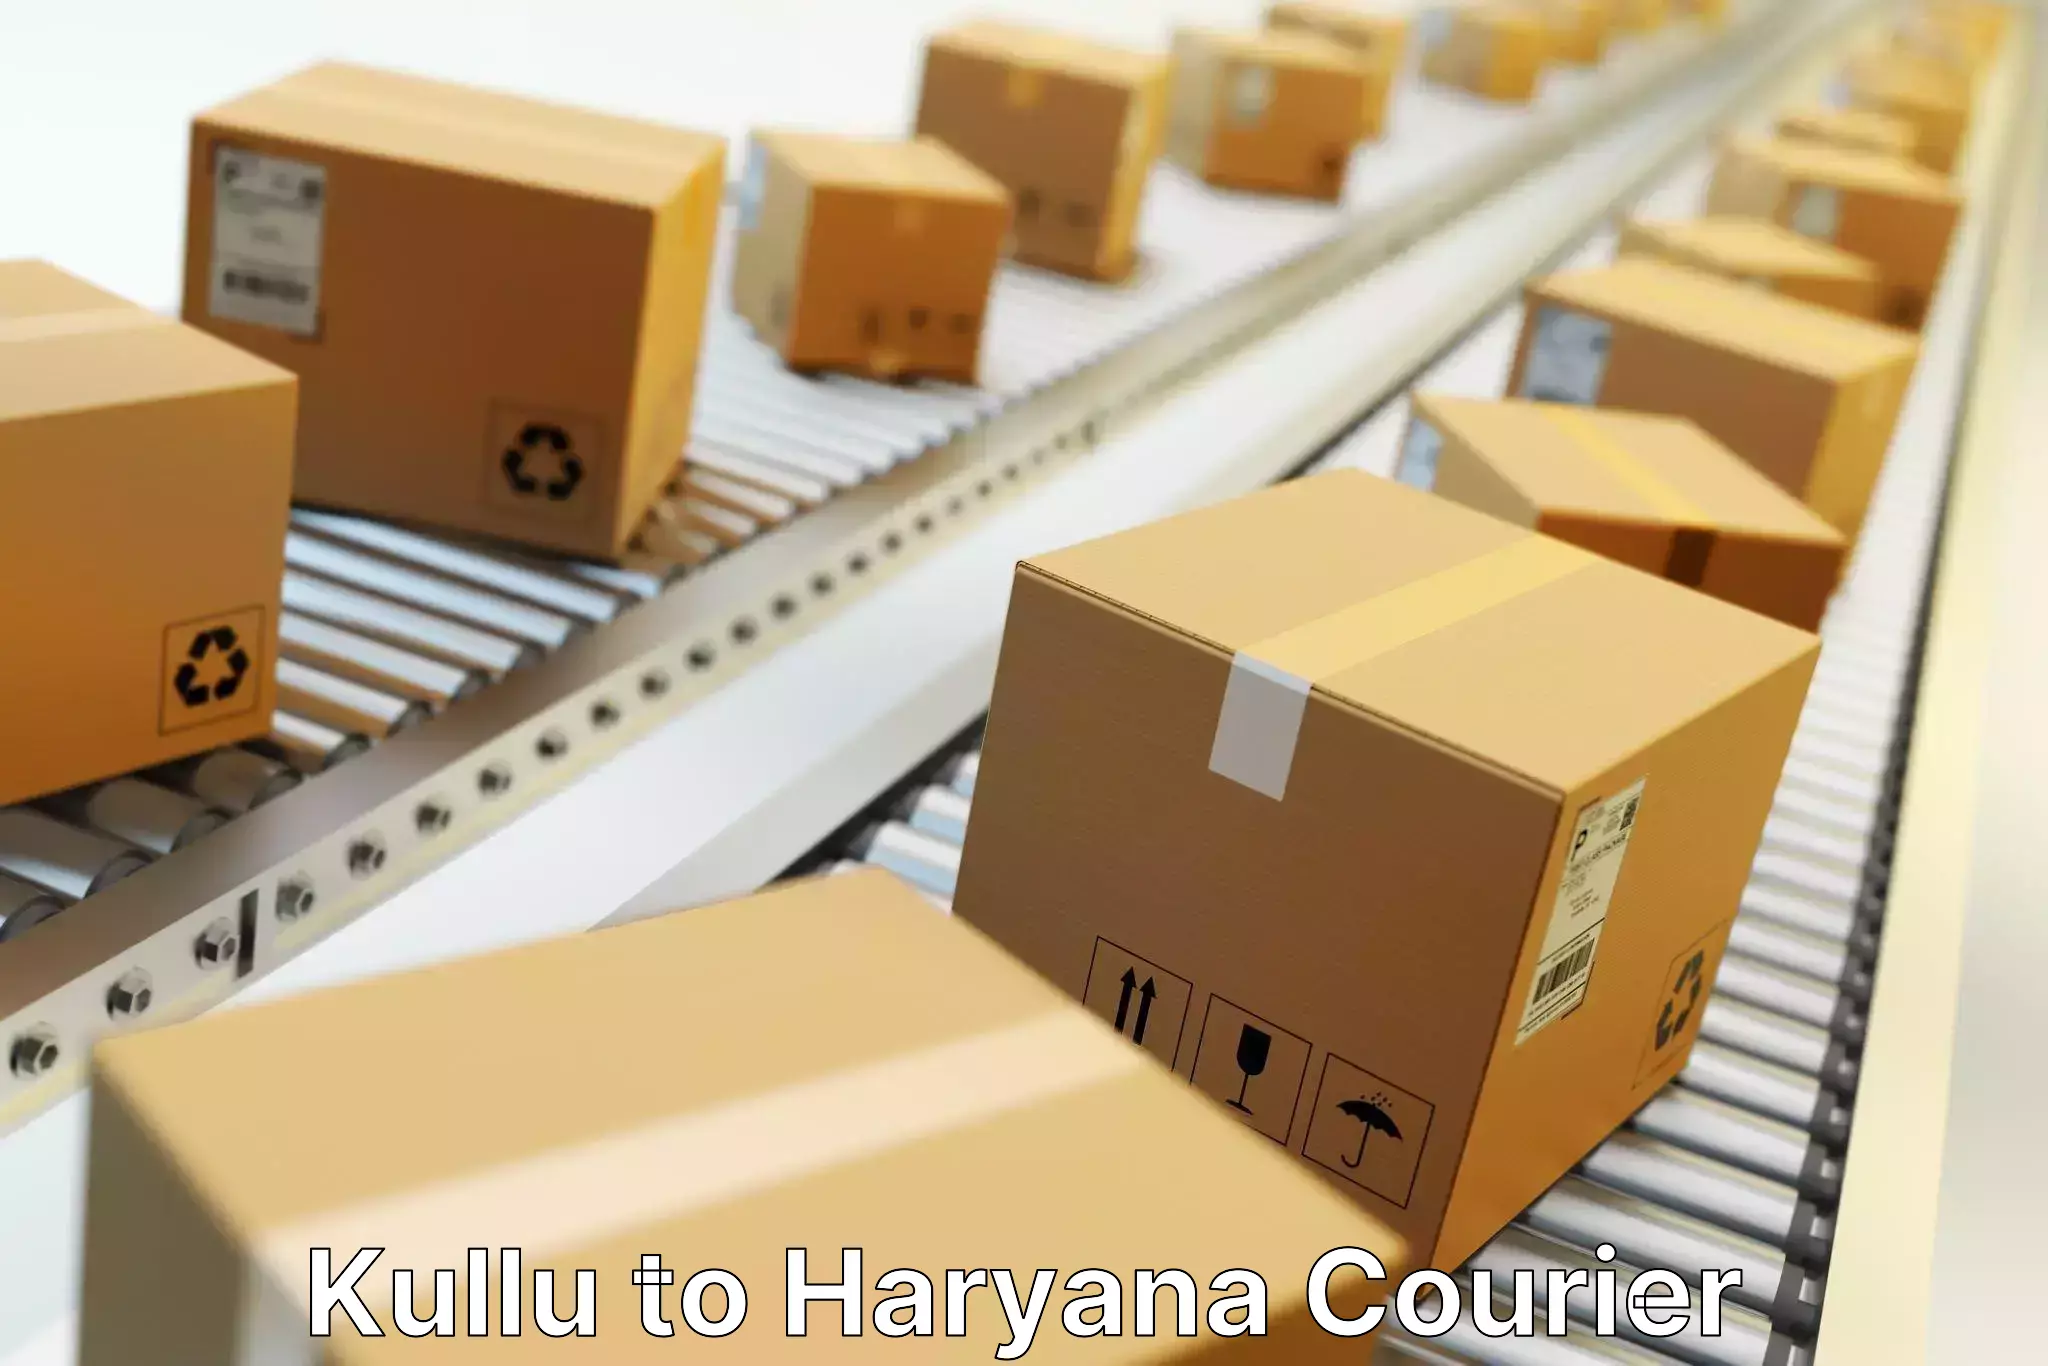 Courier service comparison Kullu to Kurukshetra University